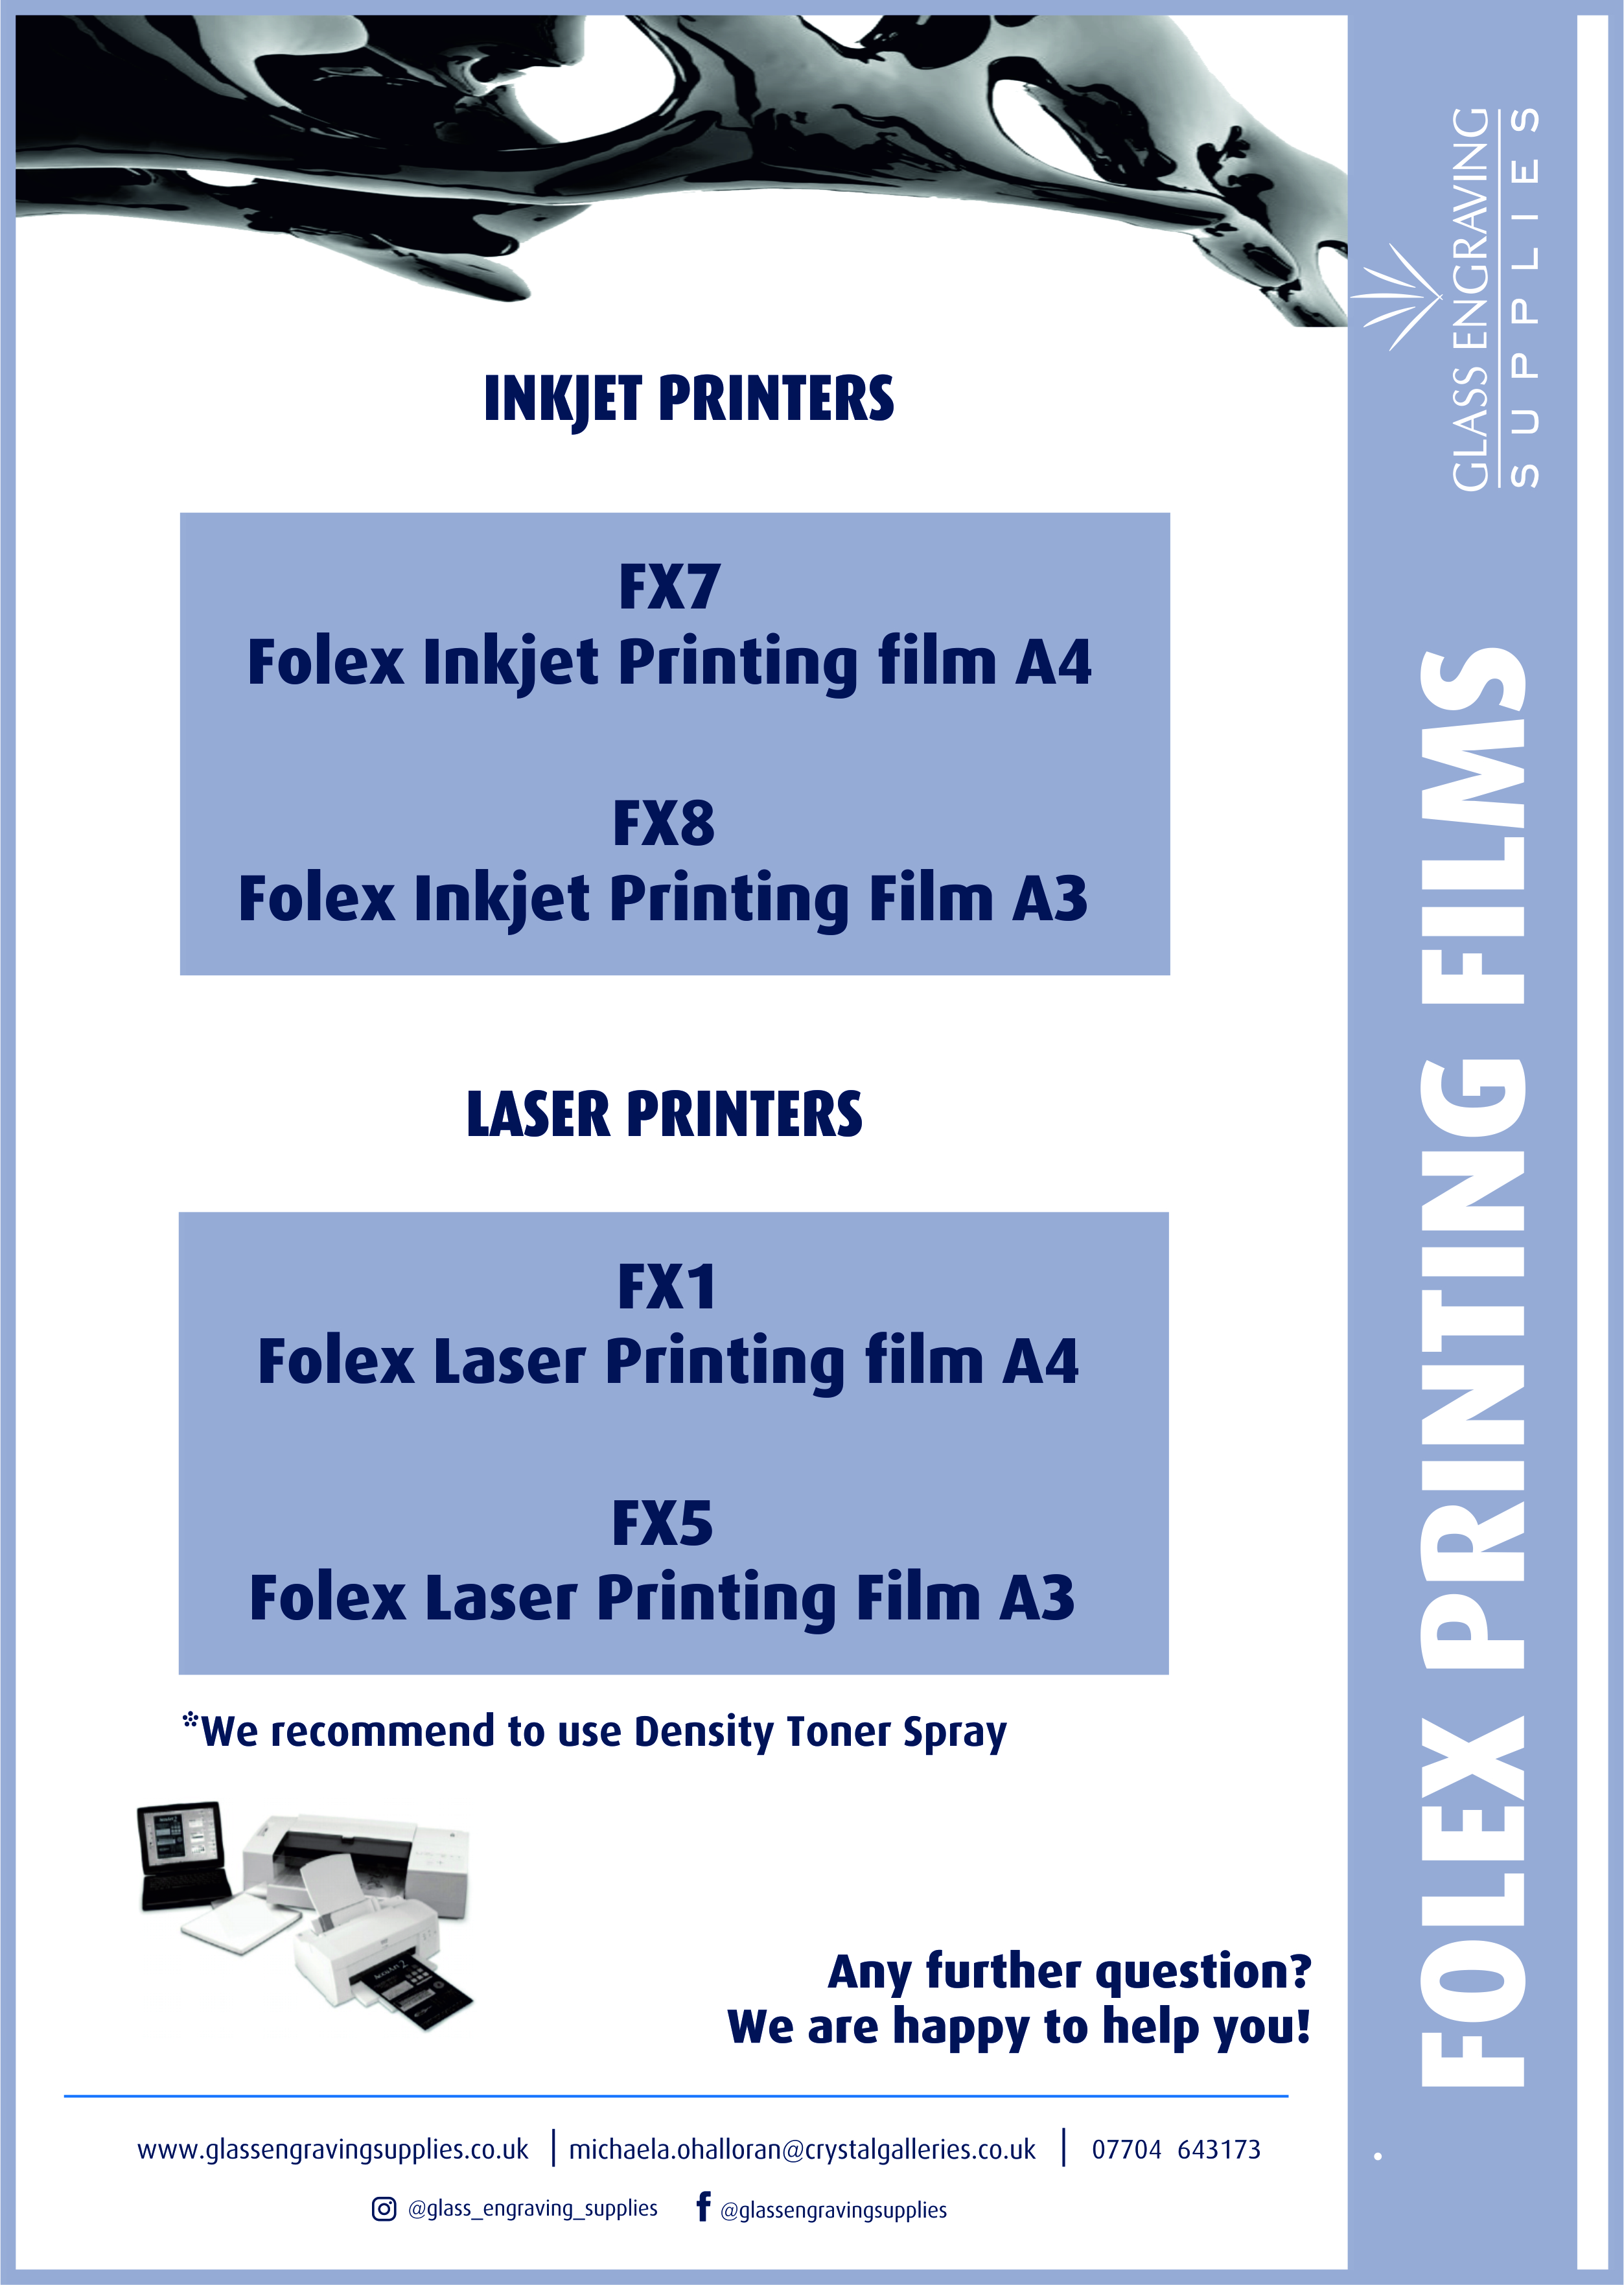 Folex Printing Films FLYER 2021.jpg